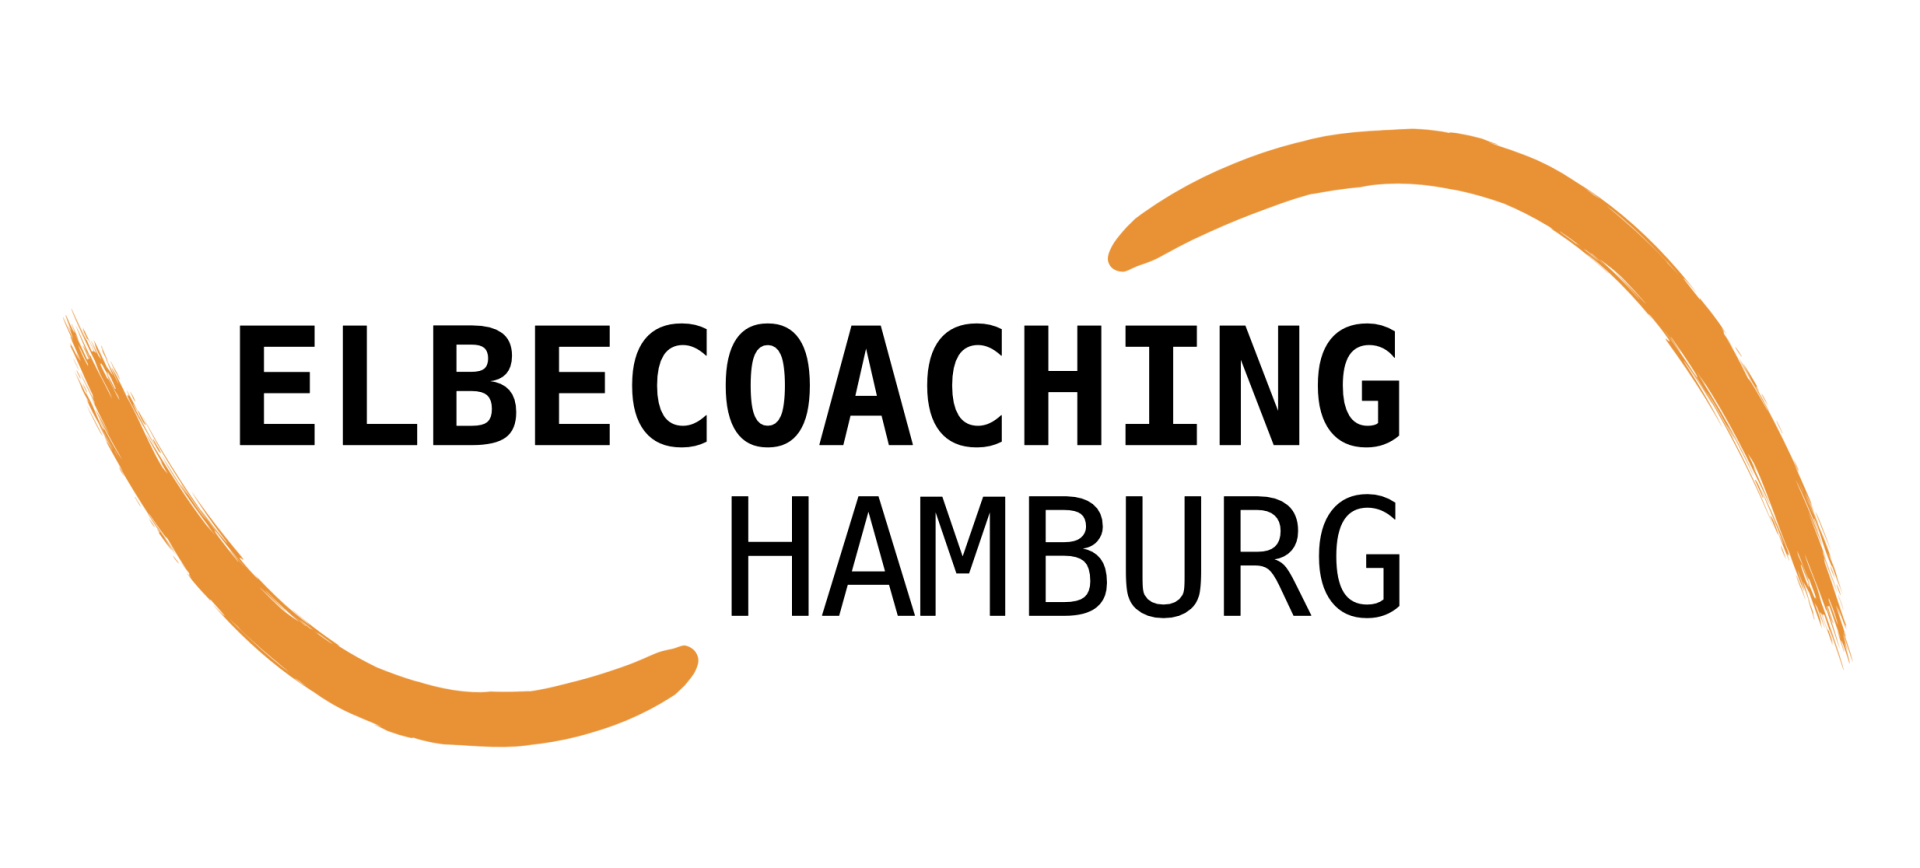 Coaching Hamburg Logo